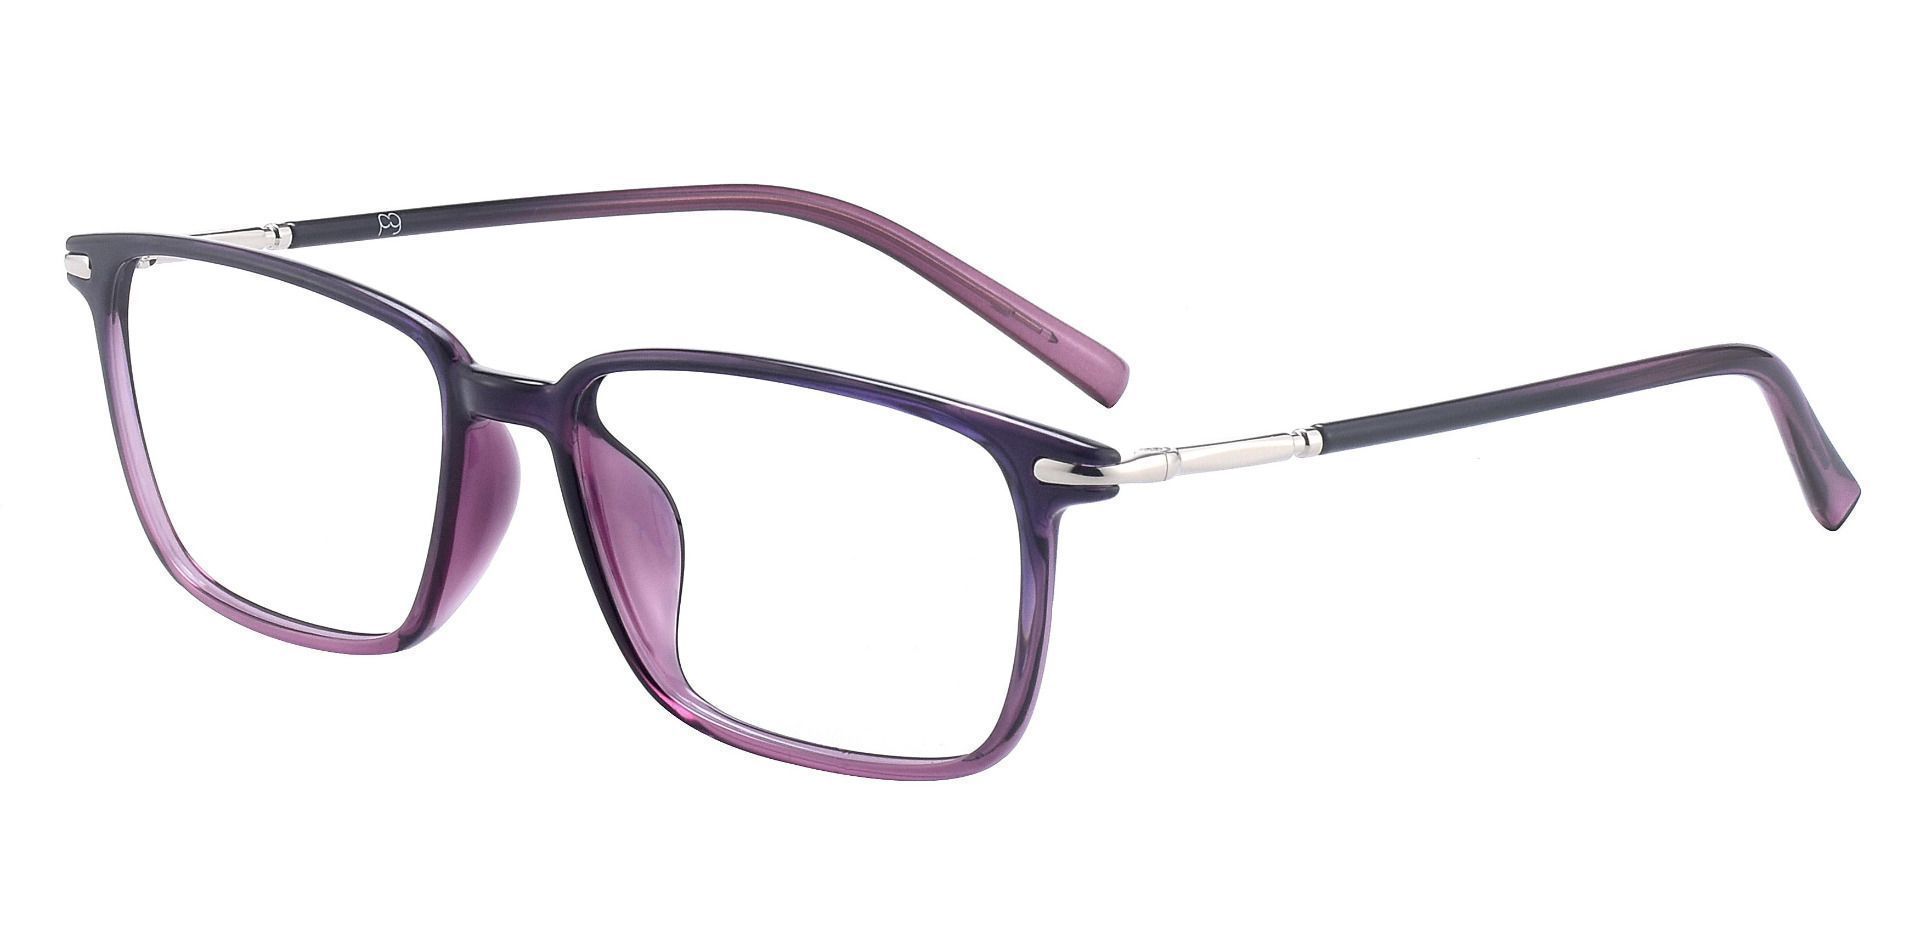 Surrey Rectangle Lined Bifocal Glasses - Purple